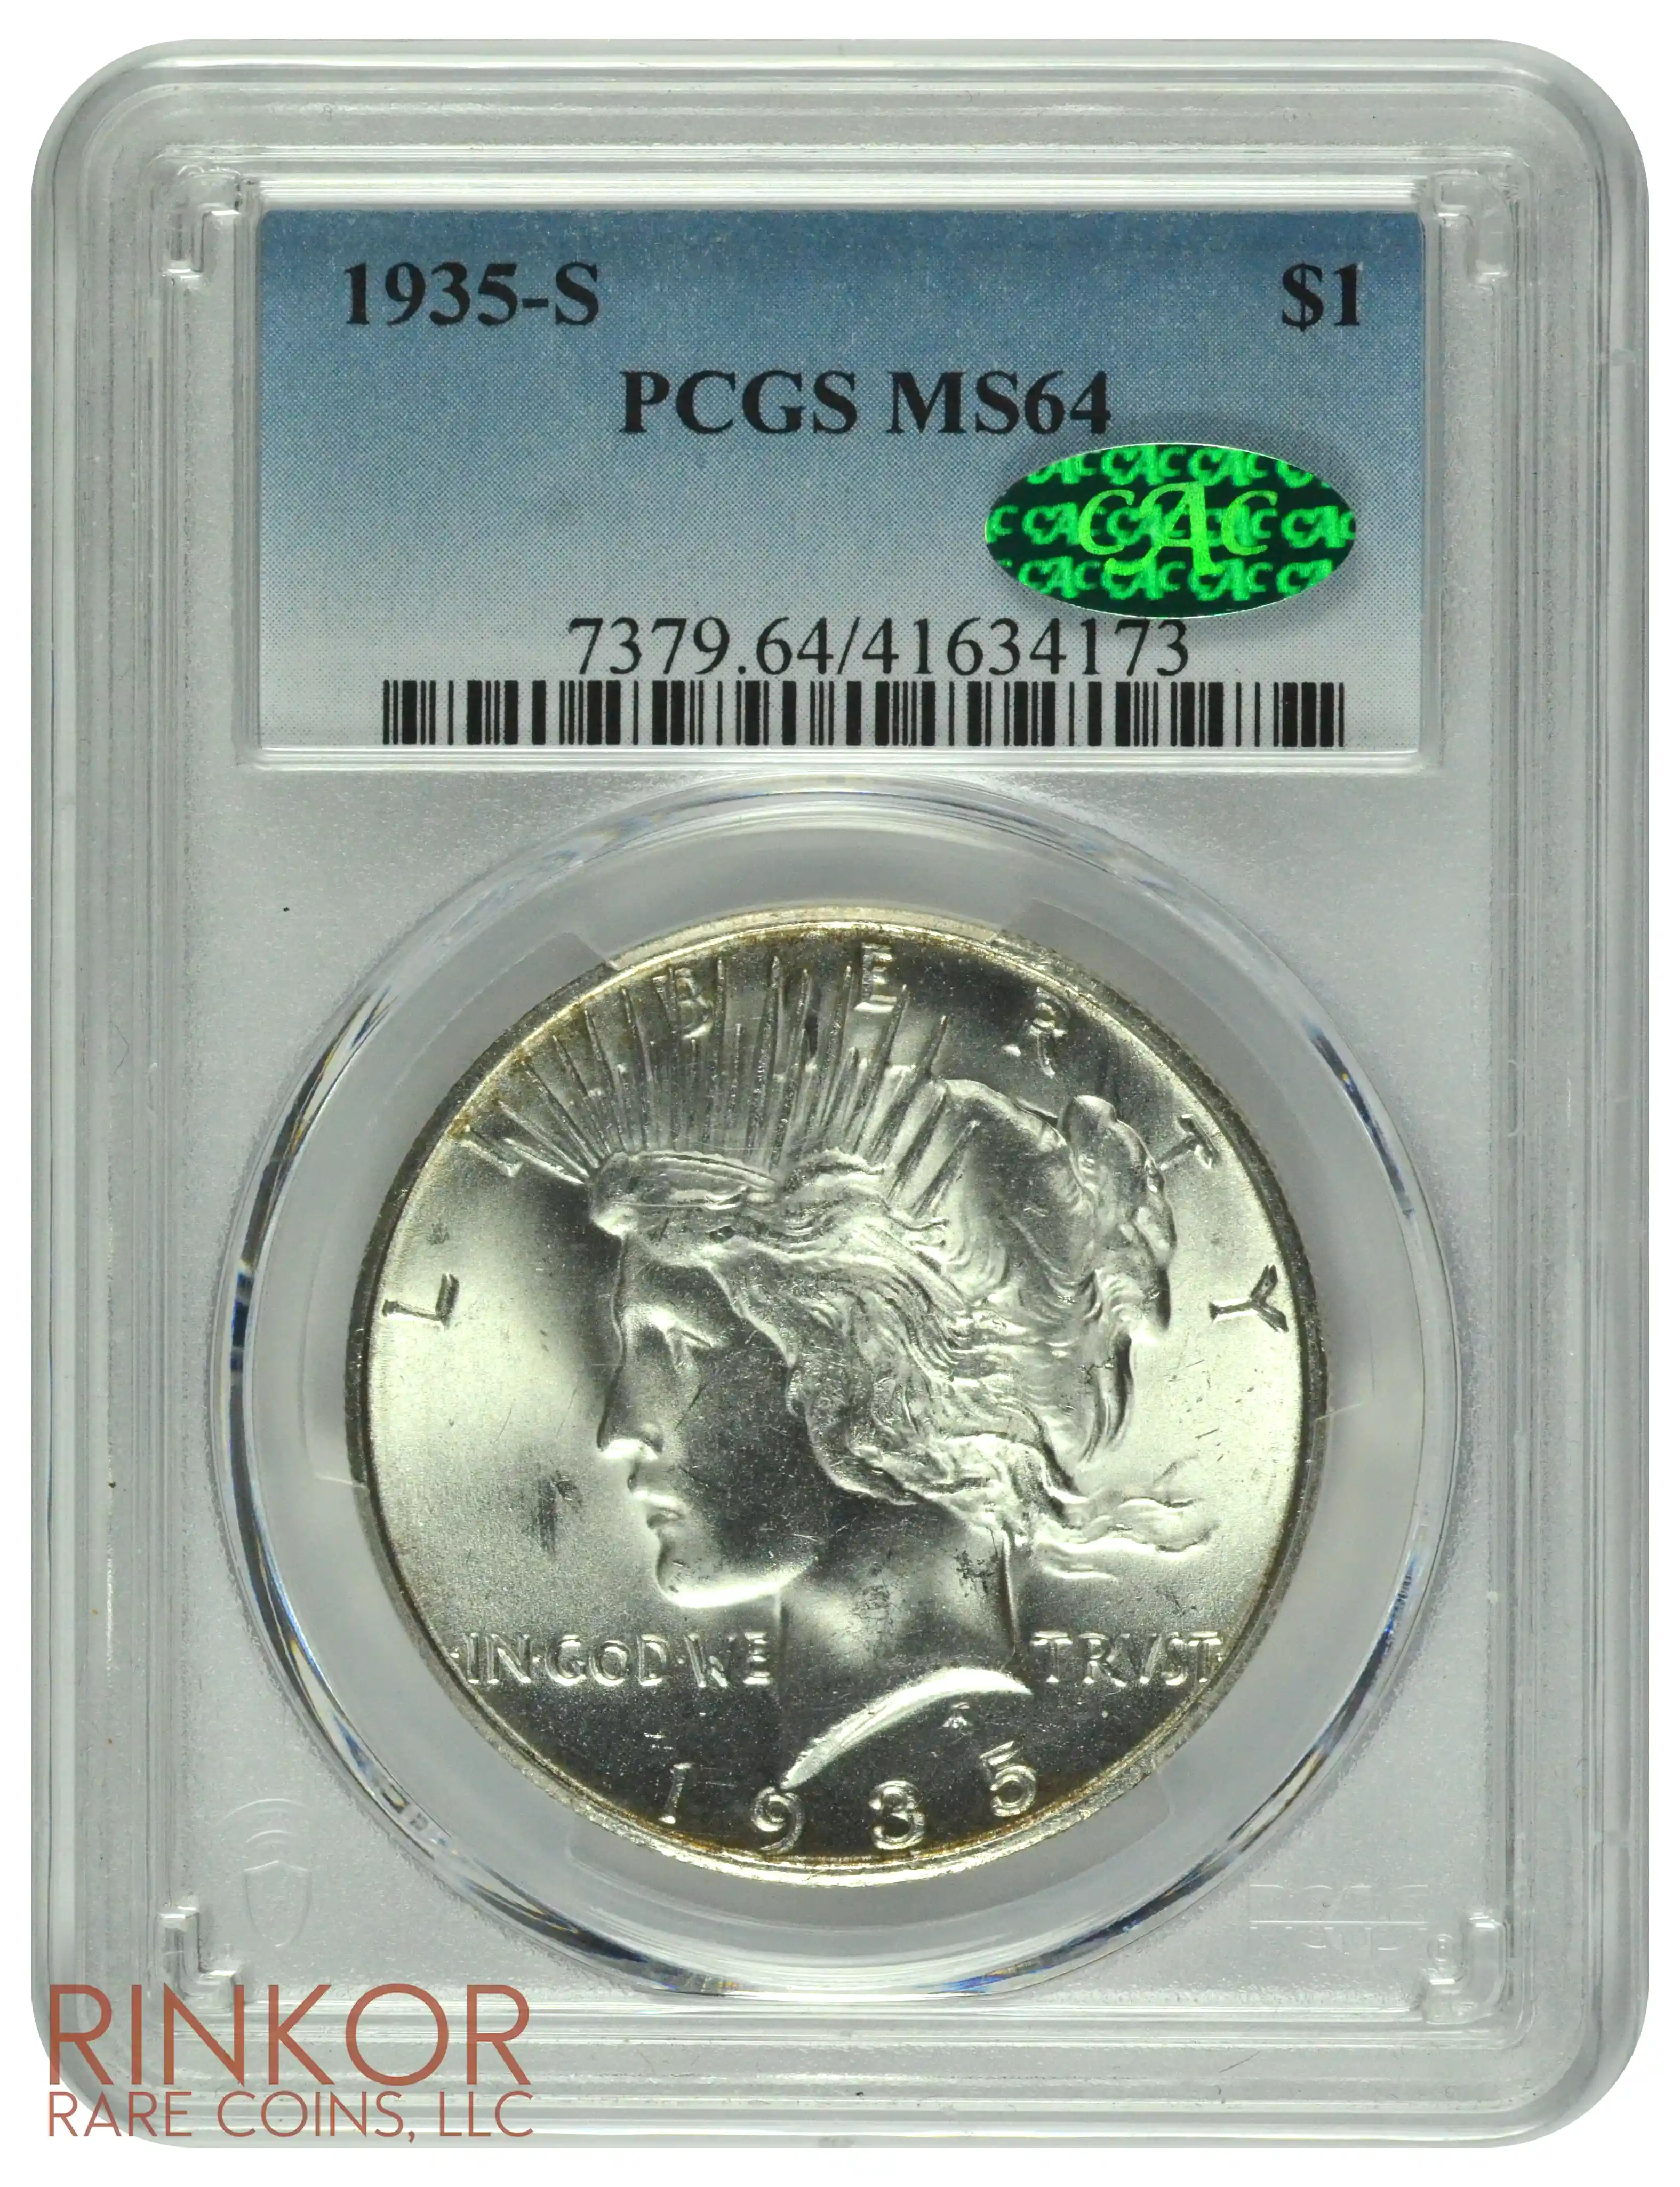 1935-S $1 PCGS MS 64 CAC